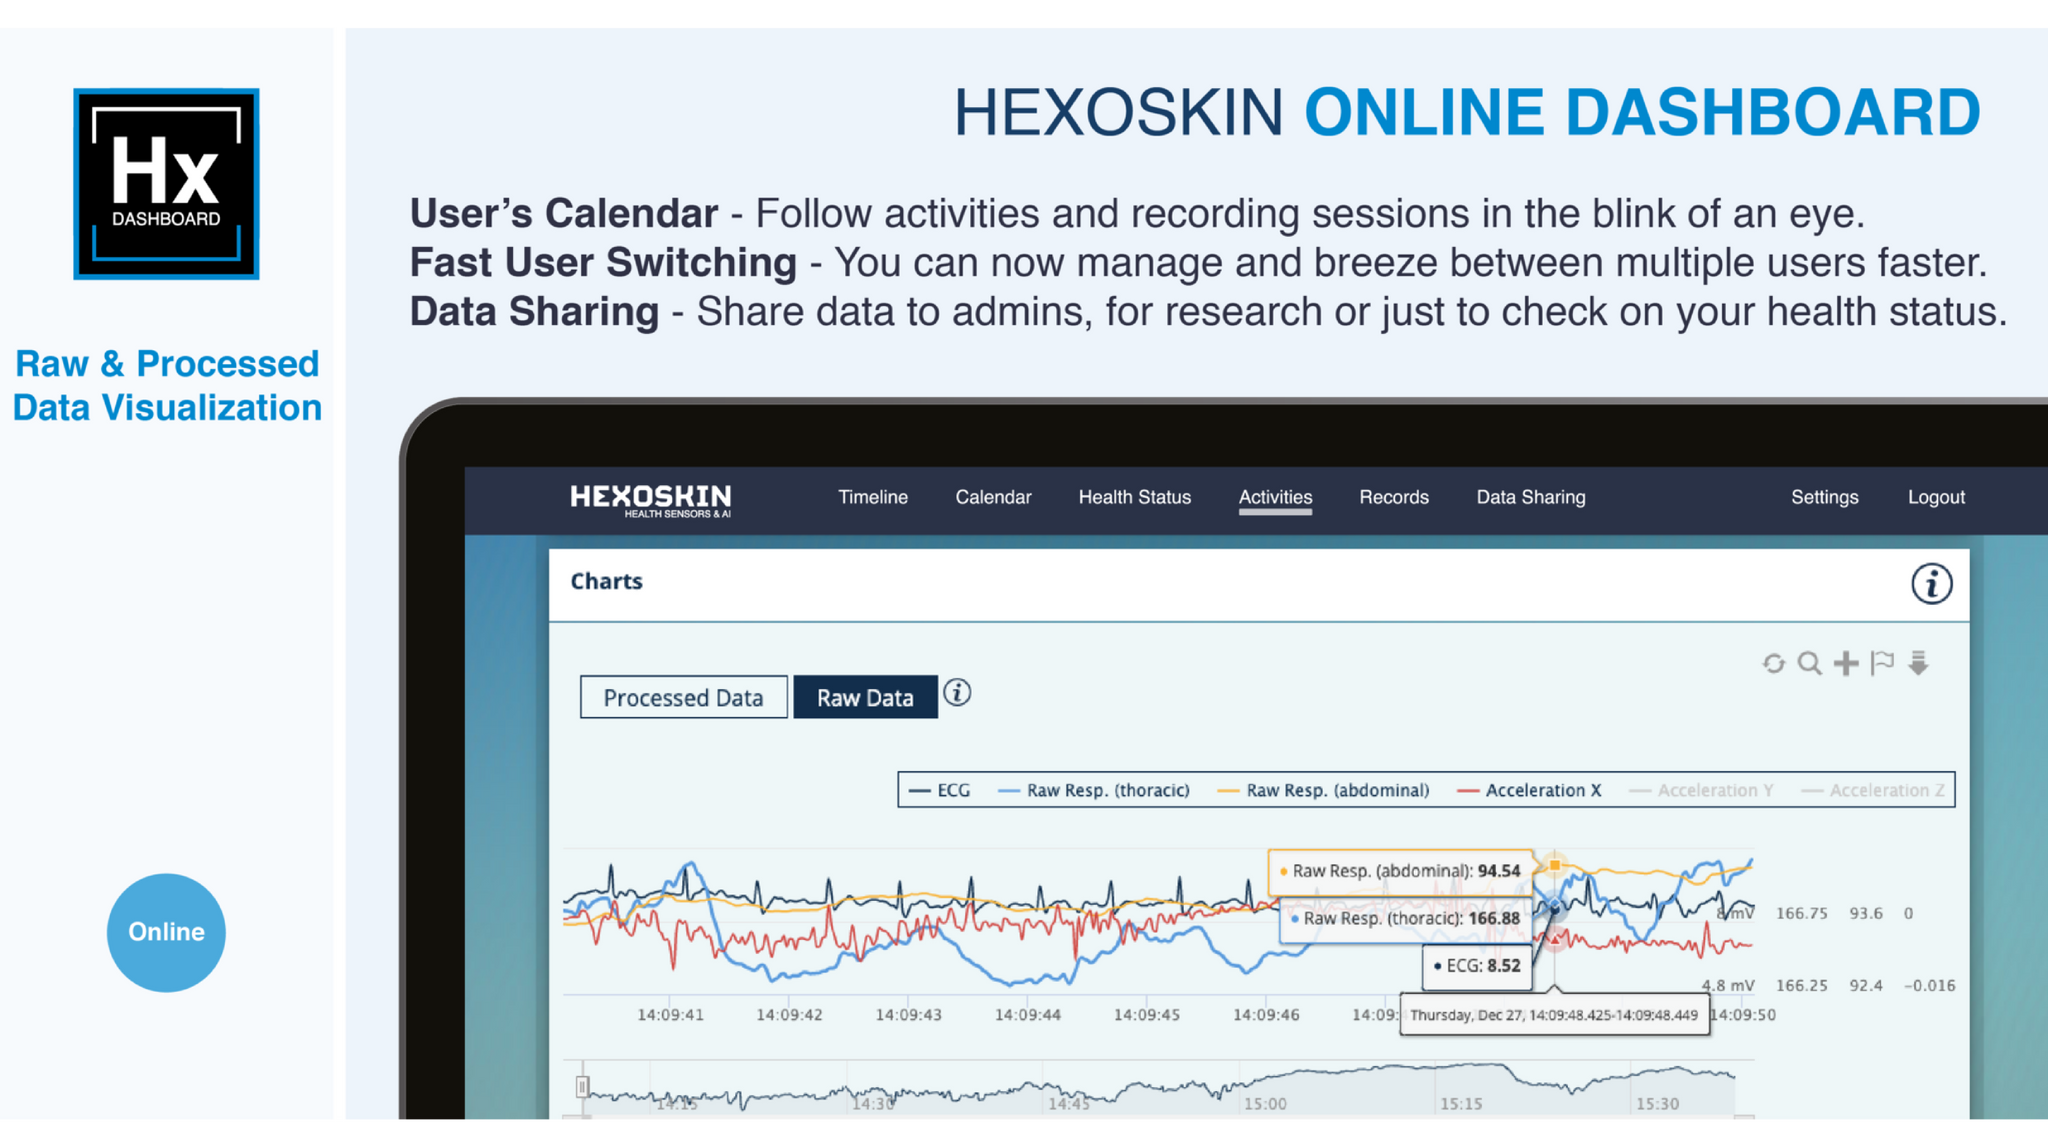 Hexoskin Dashboard - Remote Health Monitoring - Health Monitoring - Health Data